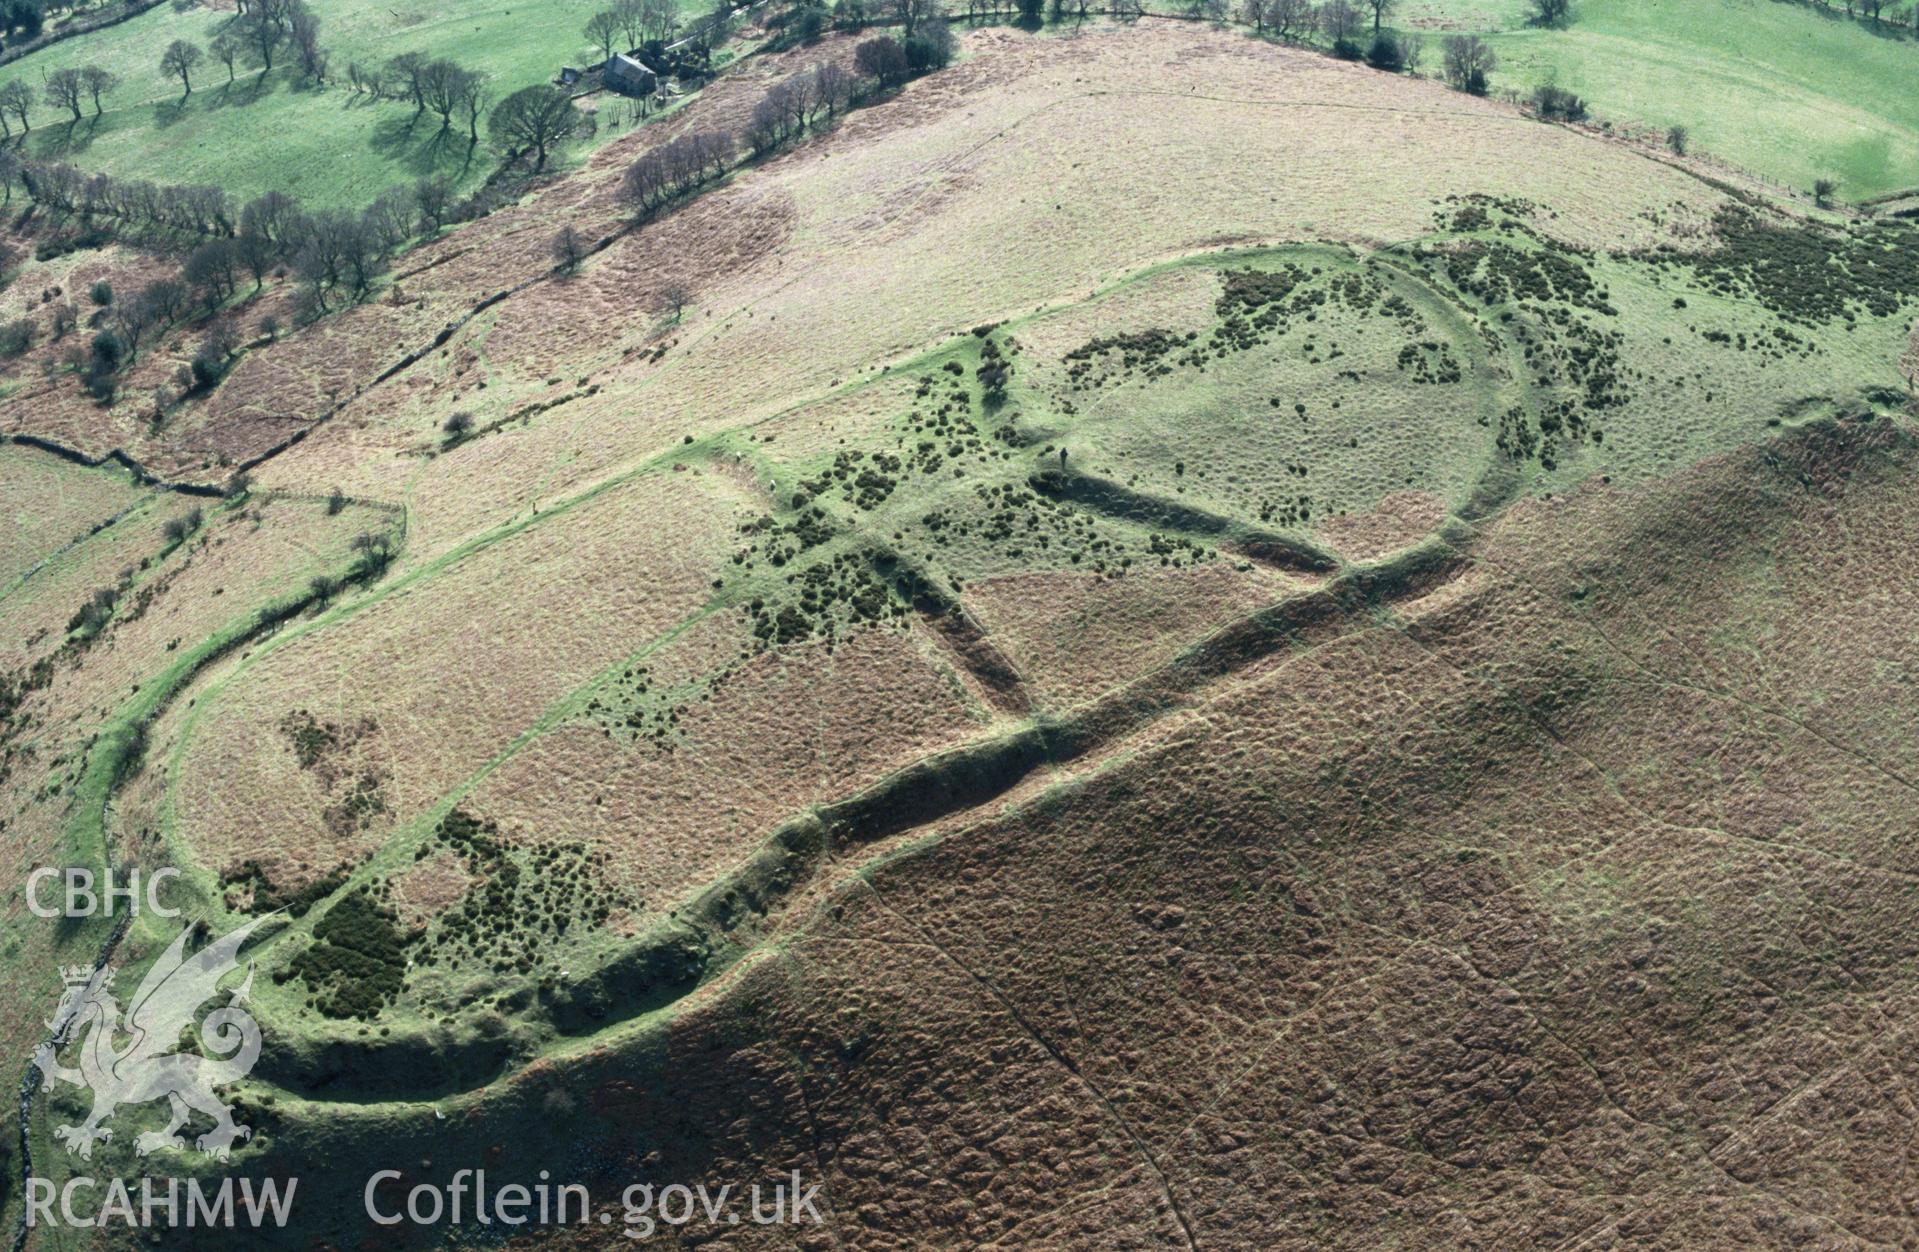 RCAHMW colour slide oblique aerial photograph of Twyn-y-gaer Camp, Crucorney, taken by C.R. Musson, 26/03/94